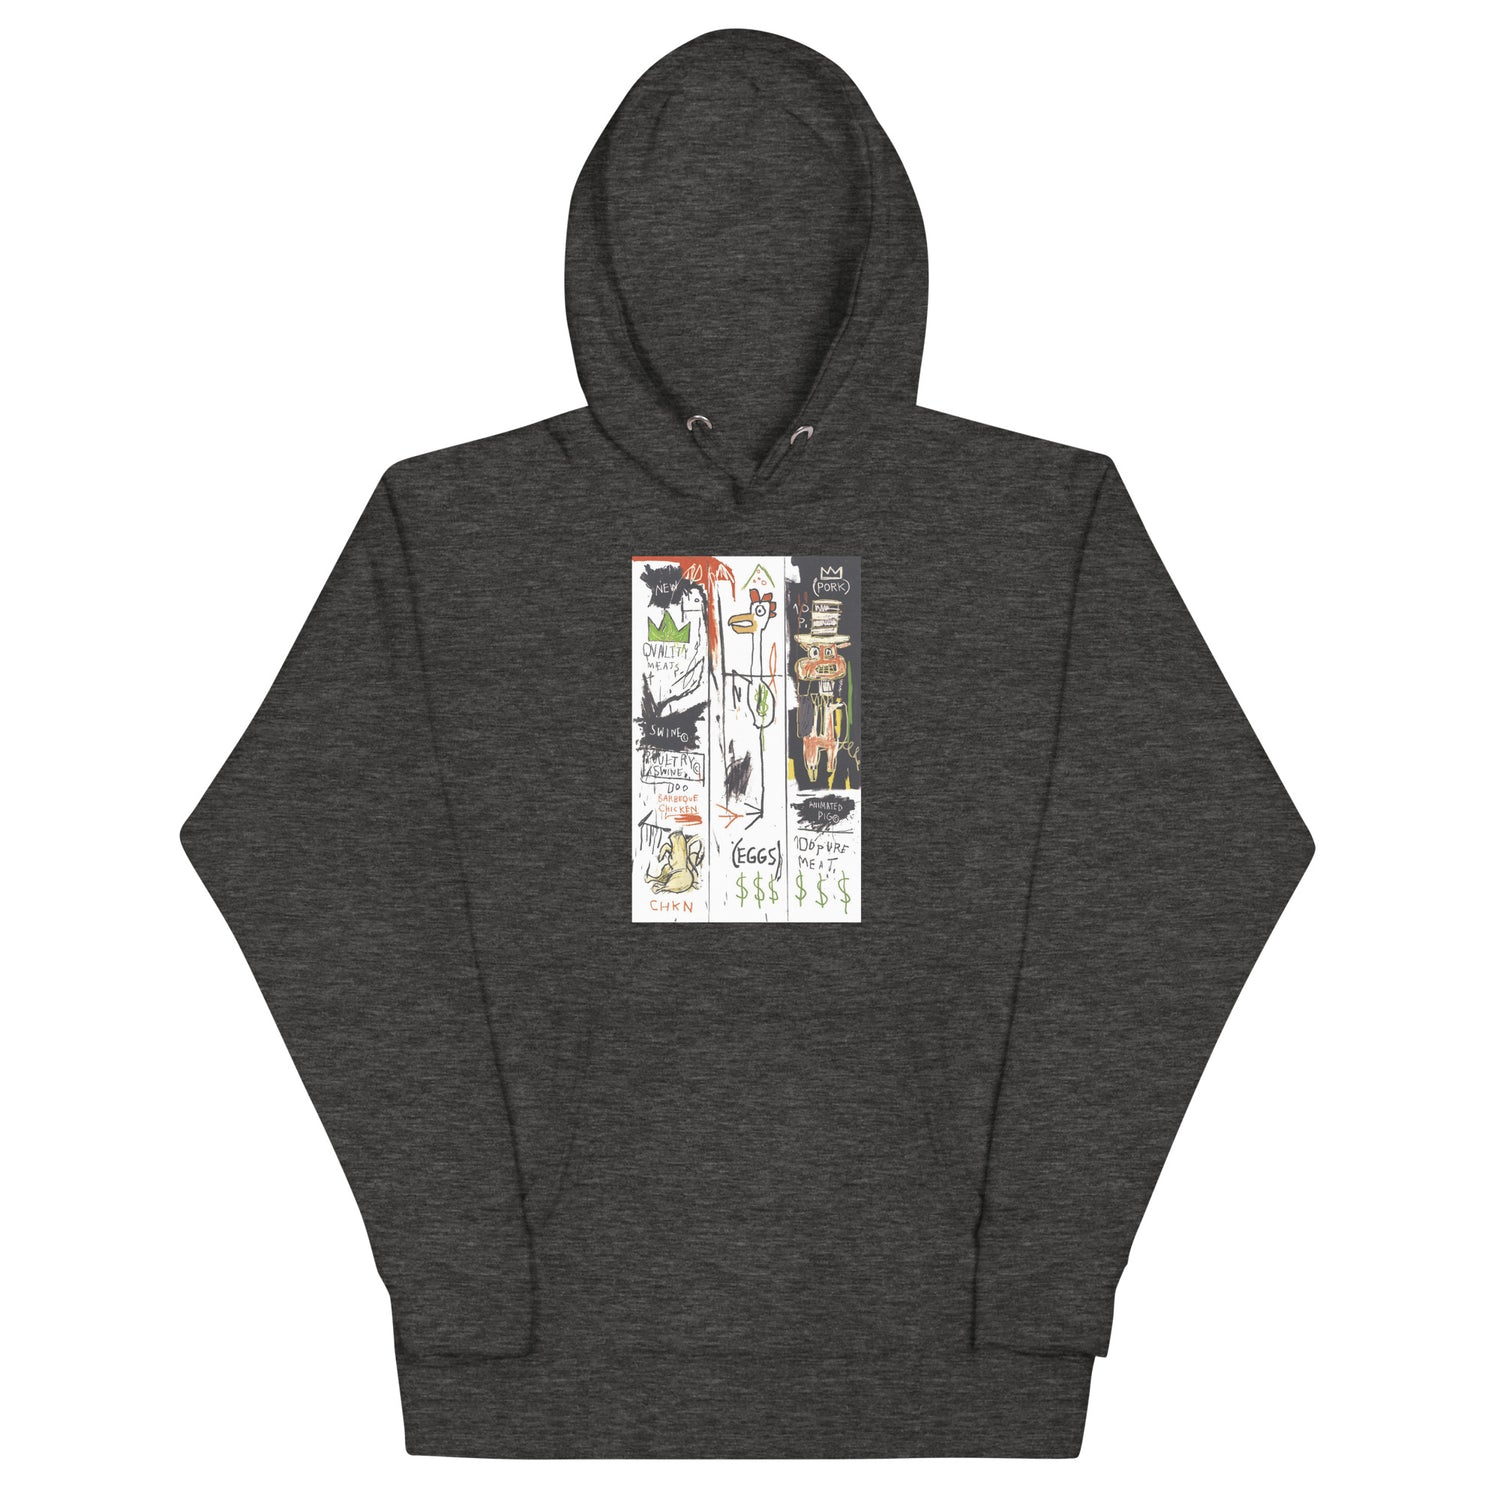 Jean-Michel Basquiat "Quality Meats for the Public" 1982 Artwork Printed Premium Streetwear Sweatshirt Hoodie Charcoal Grey